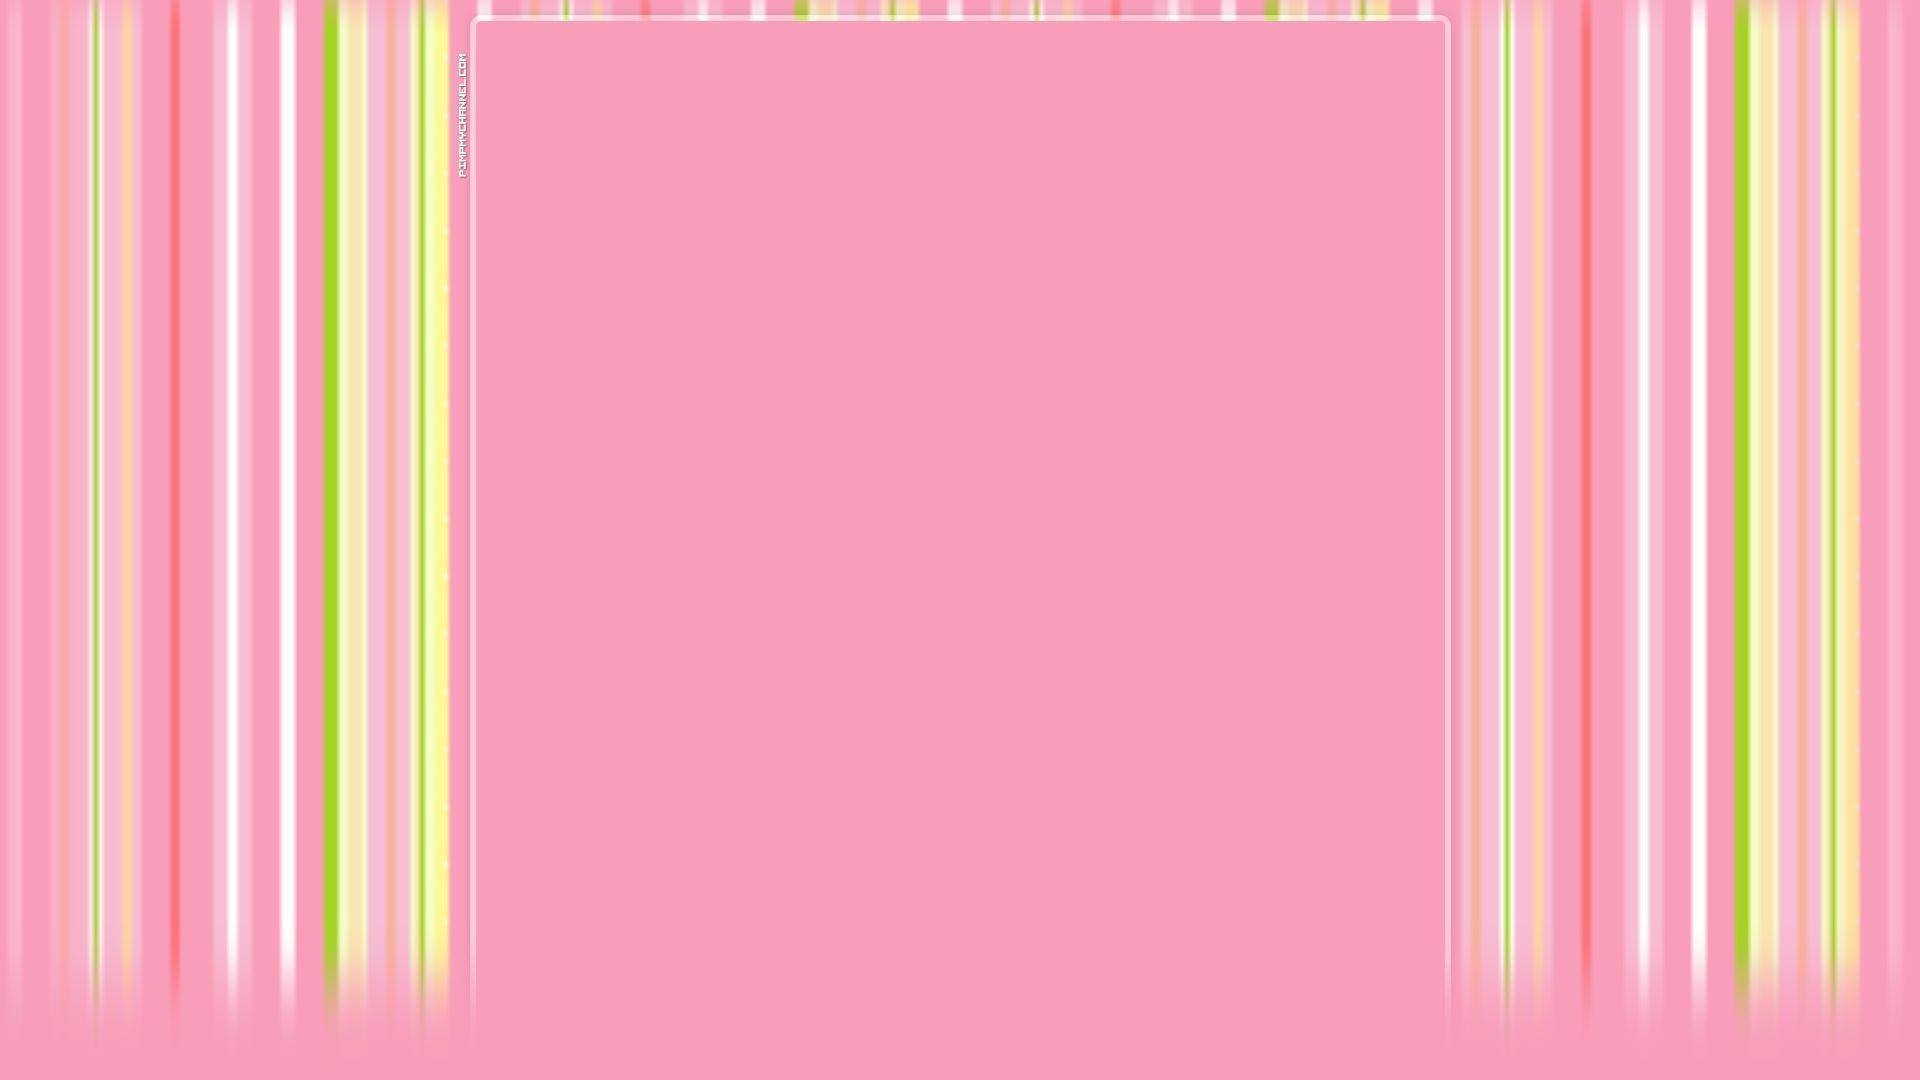 Cute Pink Image Frame